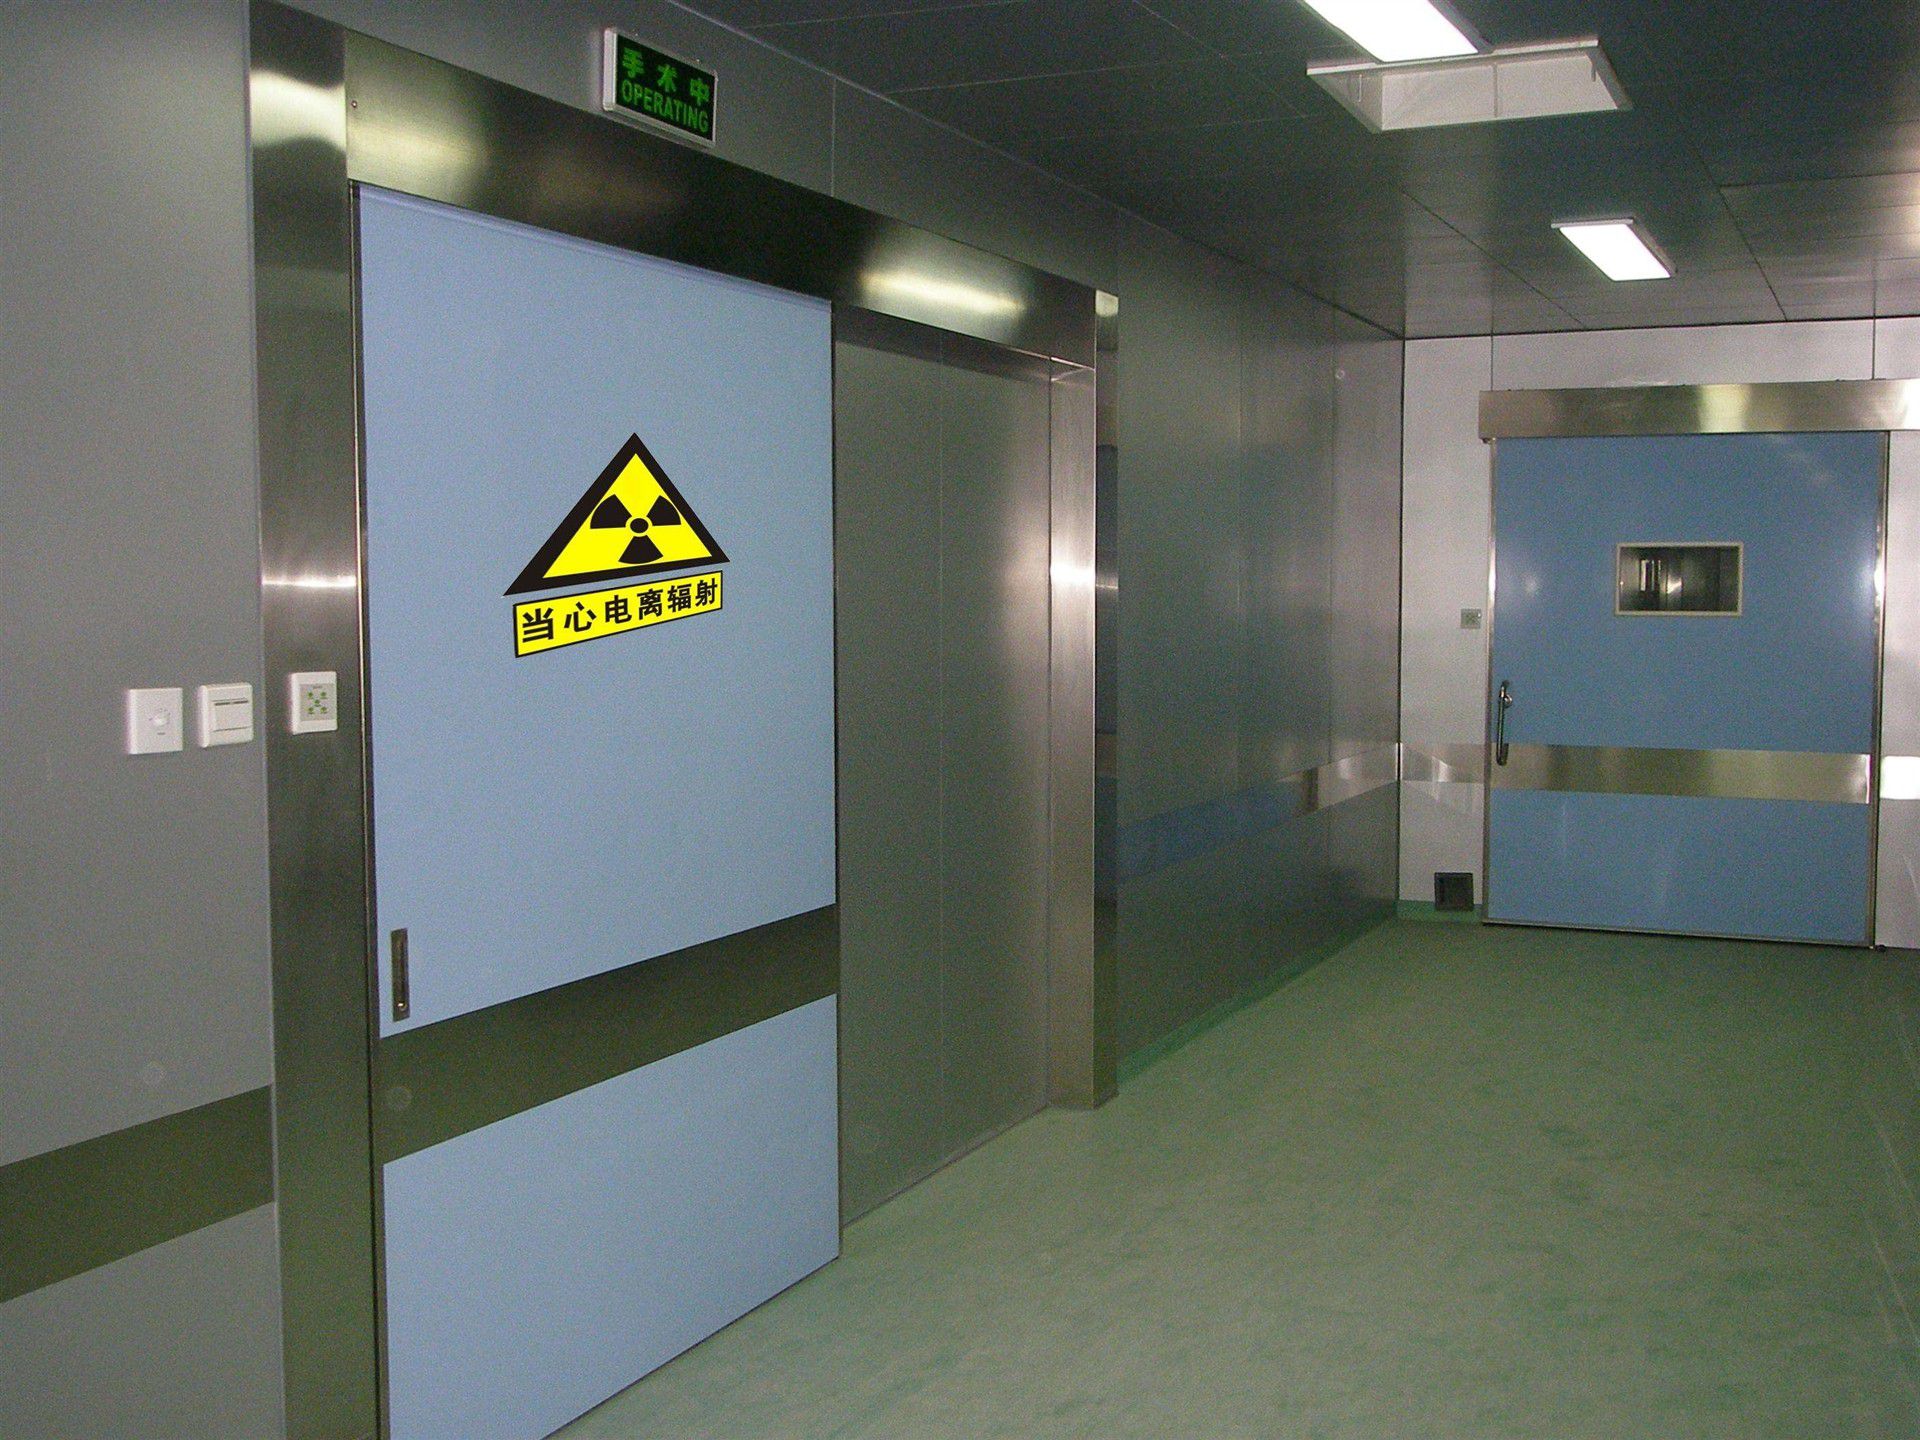 CT室铅门,铅箱,3mm铅板,CT室铅板,放射科铅板,铅板厂家-靖宇CT室铅板公司